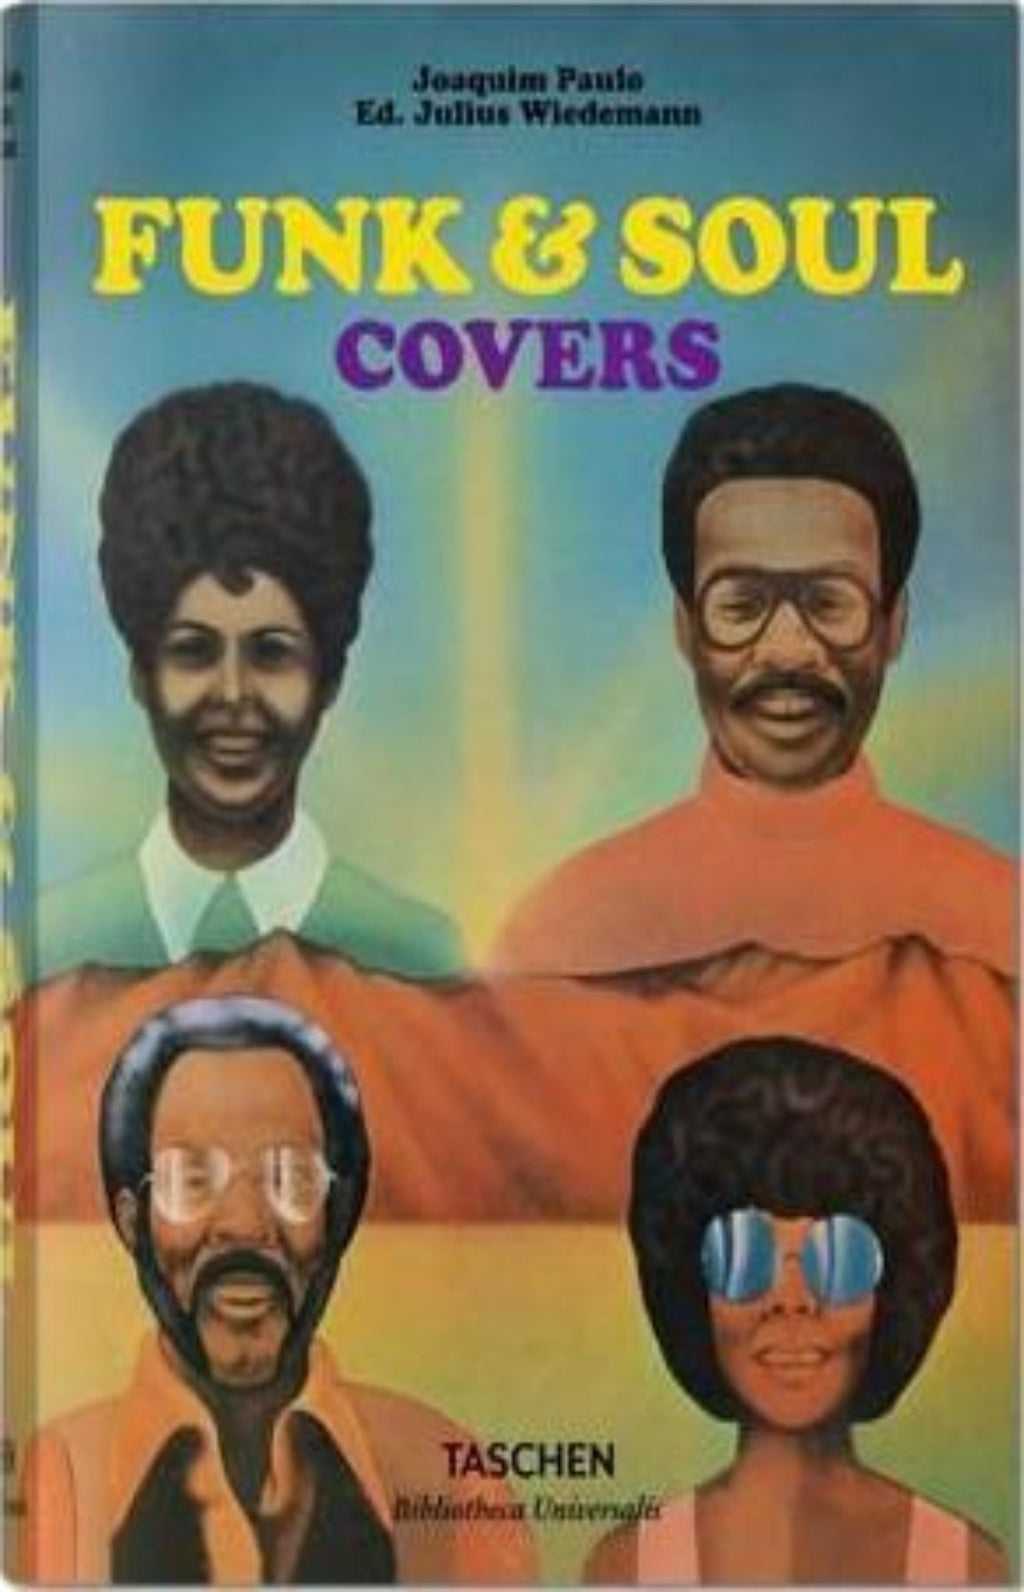 Funk & Soul Covers - Bibliotheca Universalis